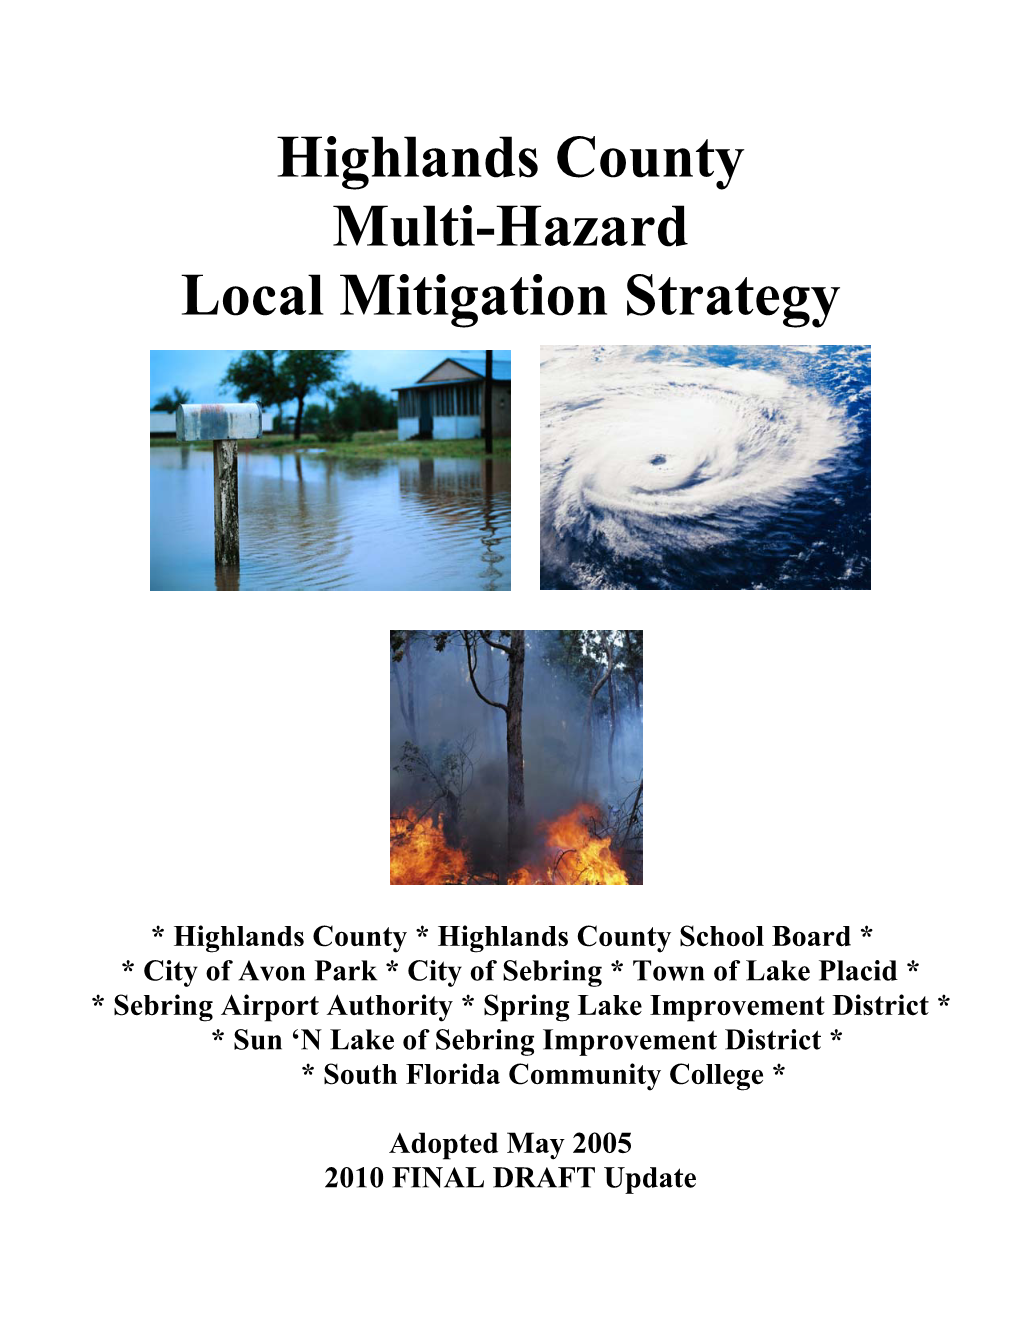 Highlands County Multi-Hazard Local Mitigation Strategy